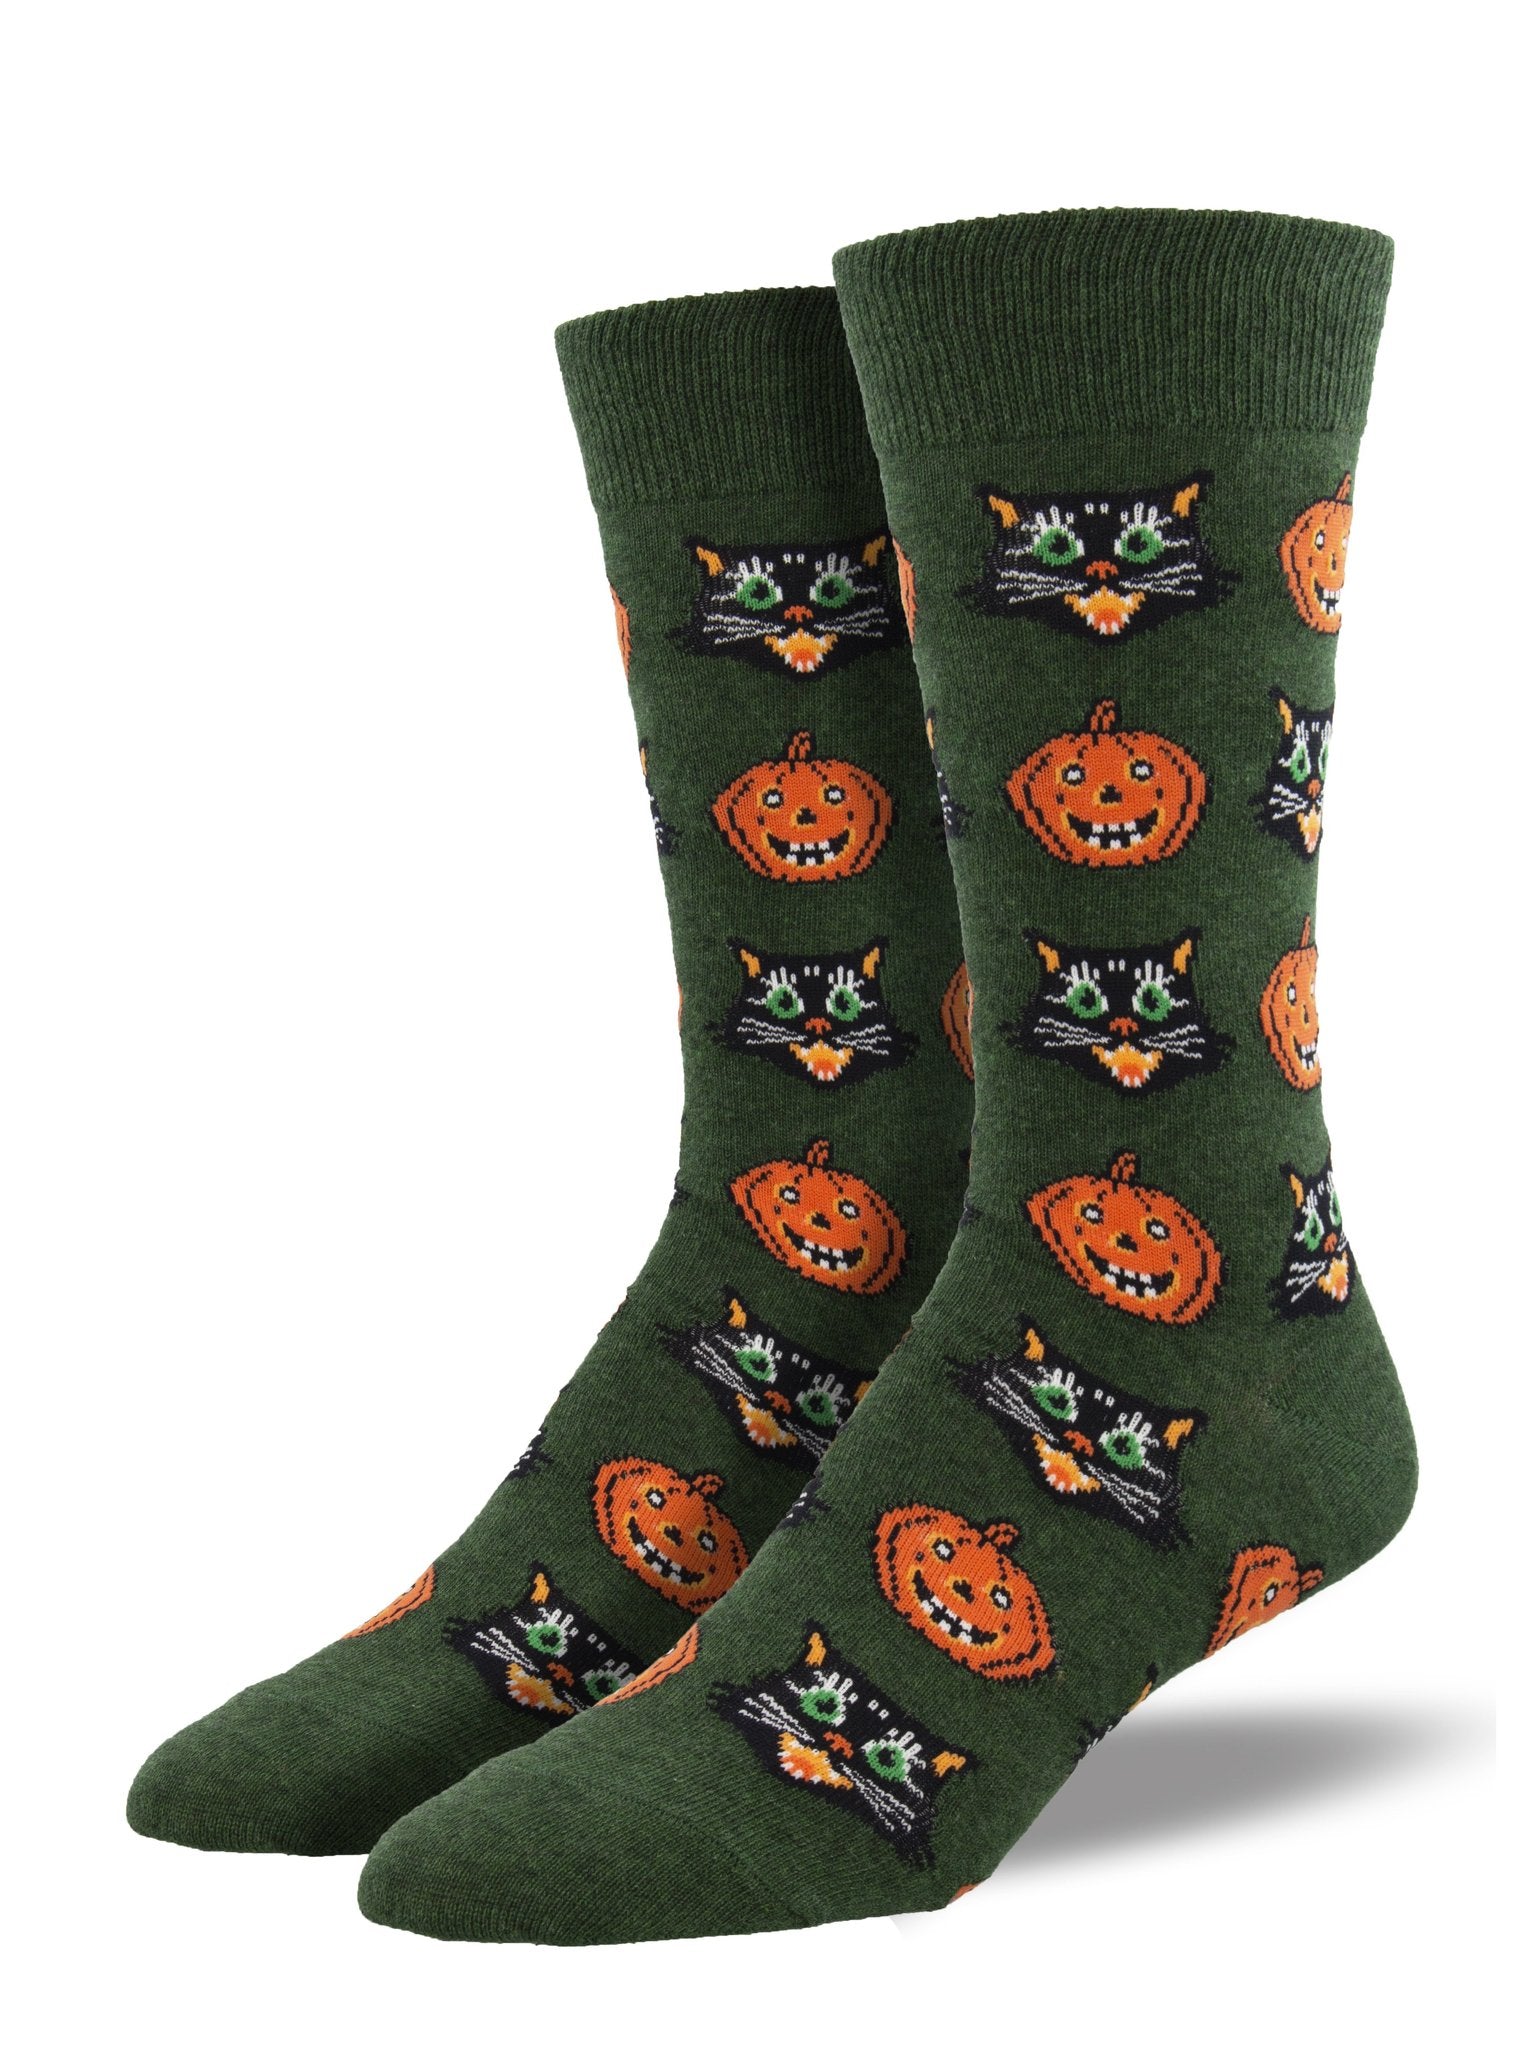 Vintage Halloween Men's Socks